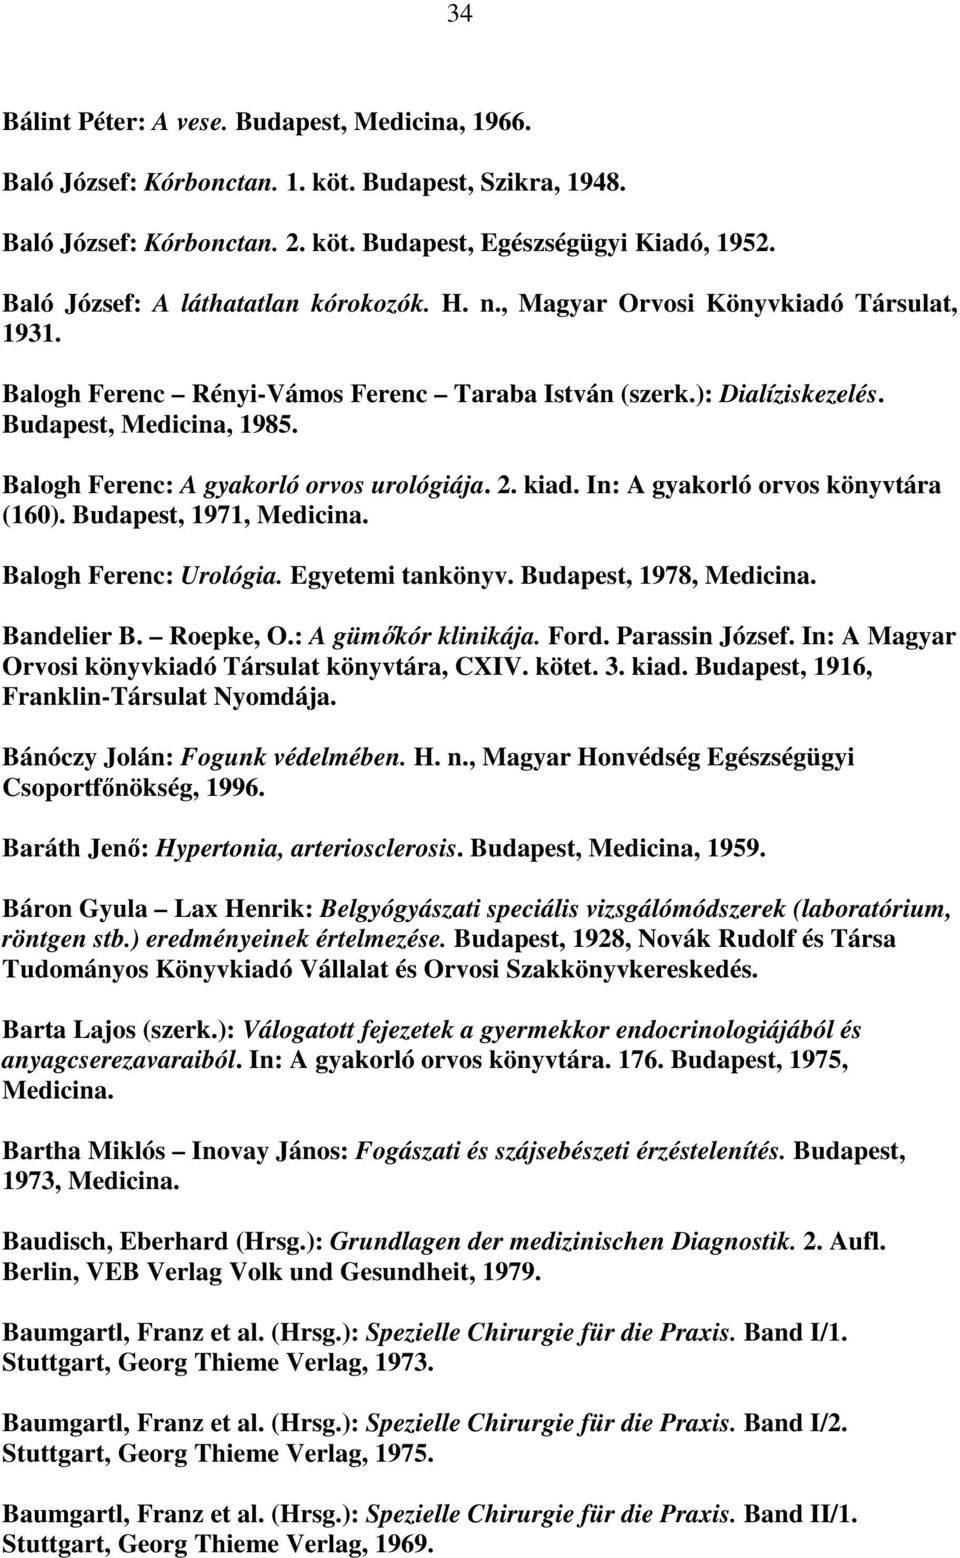 Balogh Ferenc: A gyakorló orvos urológiája. 2. kiad. In: A gyakorló orvos könyvtára (160). Budapest, 1971, Medicina. Balogh Ferenc: Urológia. Egyetemi tankönyv. Budapest, 1978, Medicina. Bandelier B.